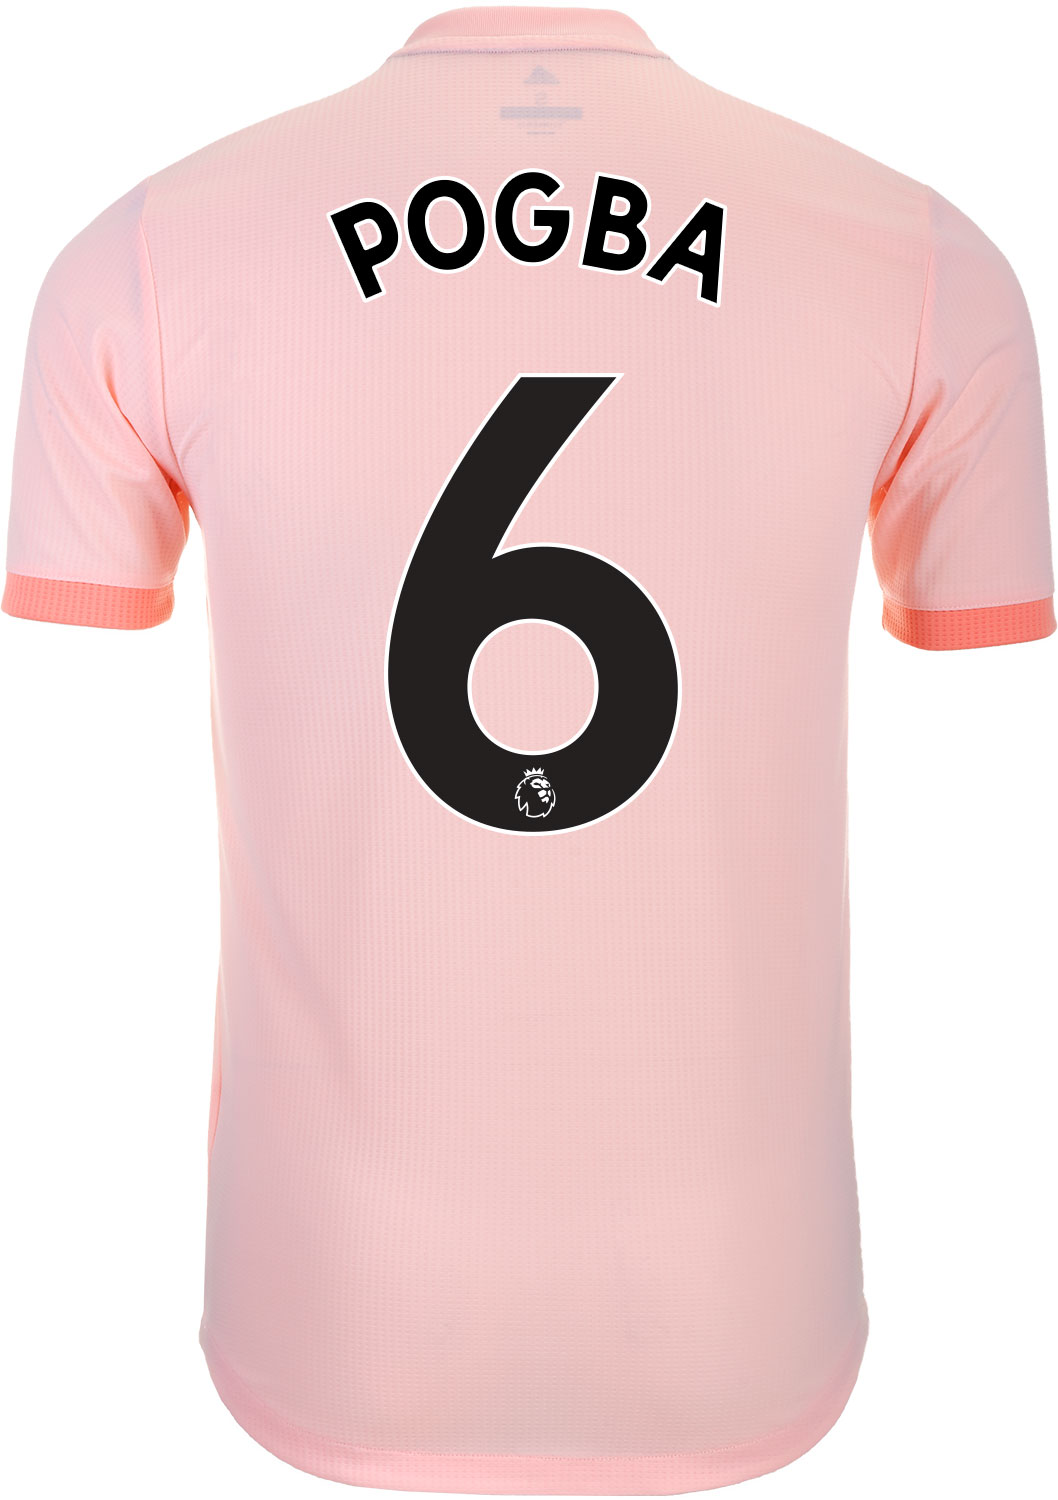 2018/19 adidas Pogba Manchester United Away Jersey SoccerPro